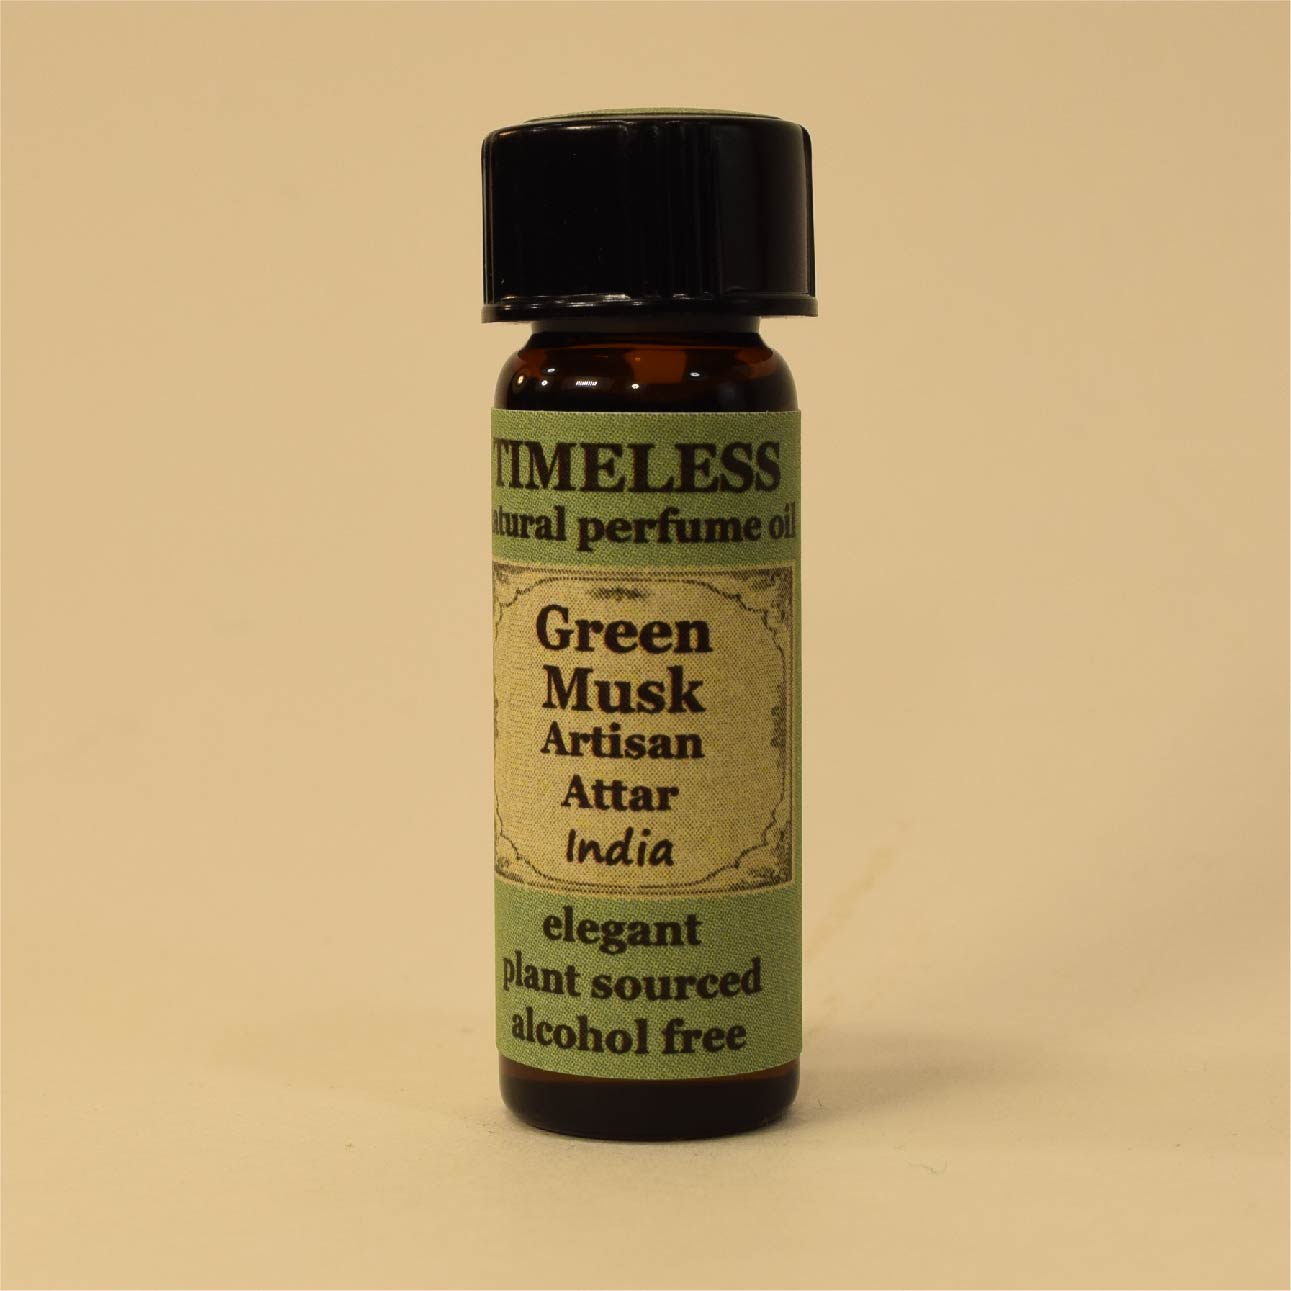 TIMELESS Green Musk Attar has a clean, uplifting, light fragrance